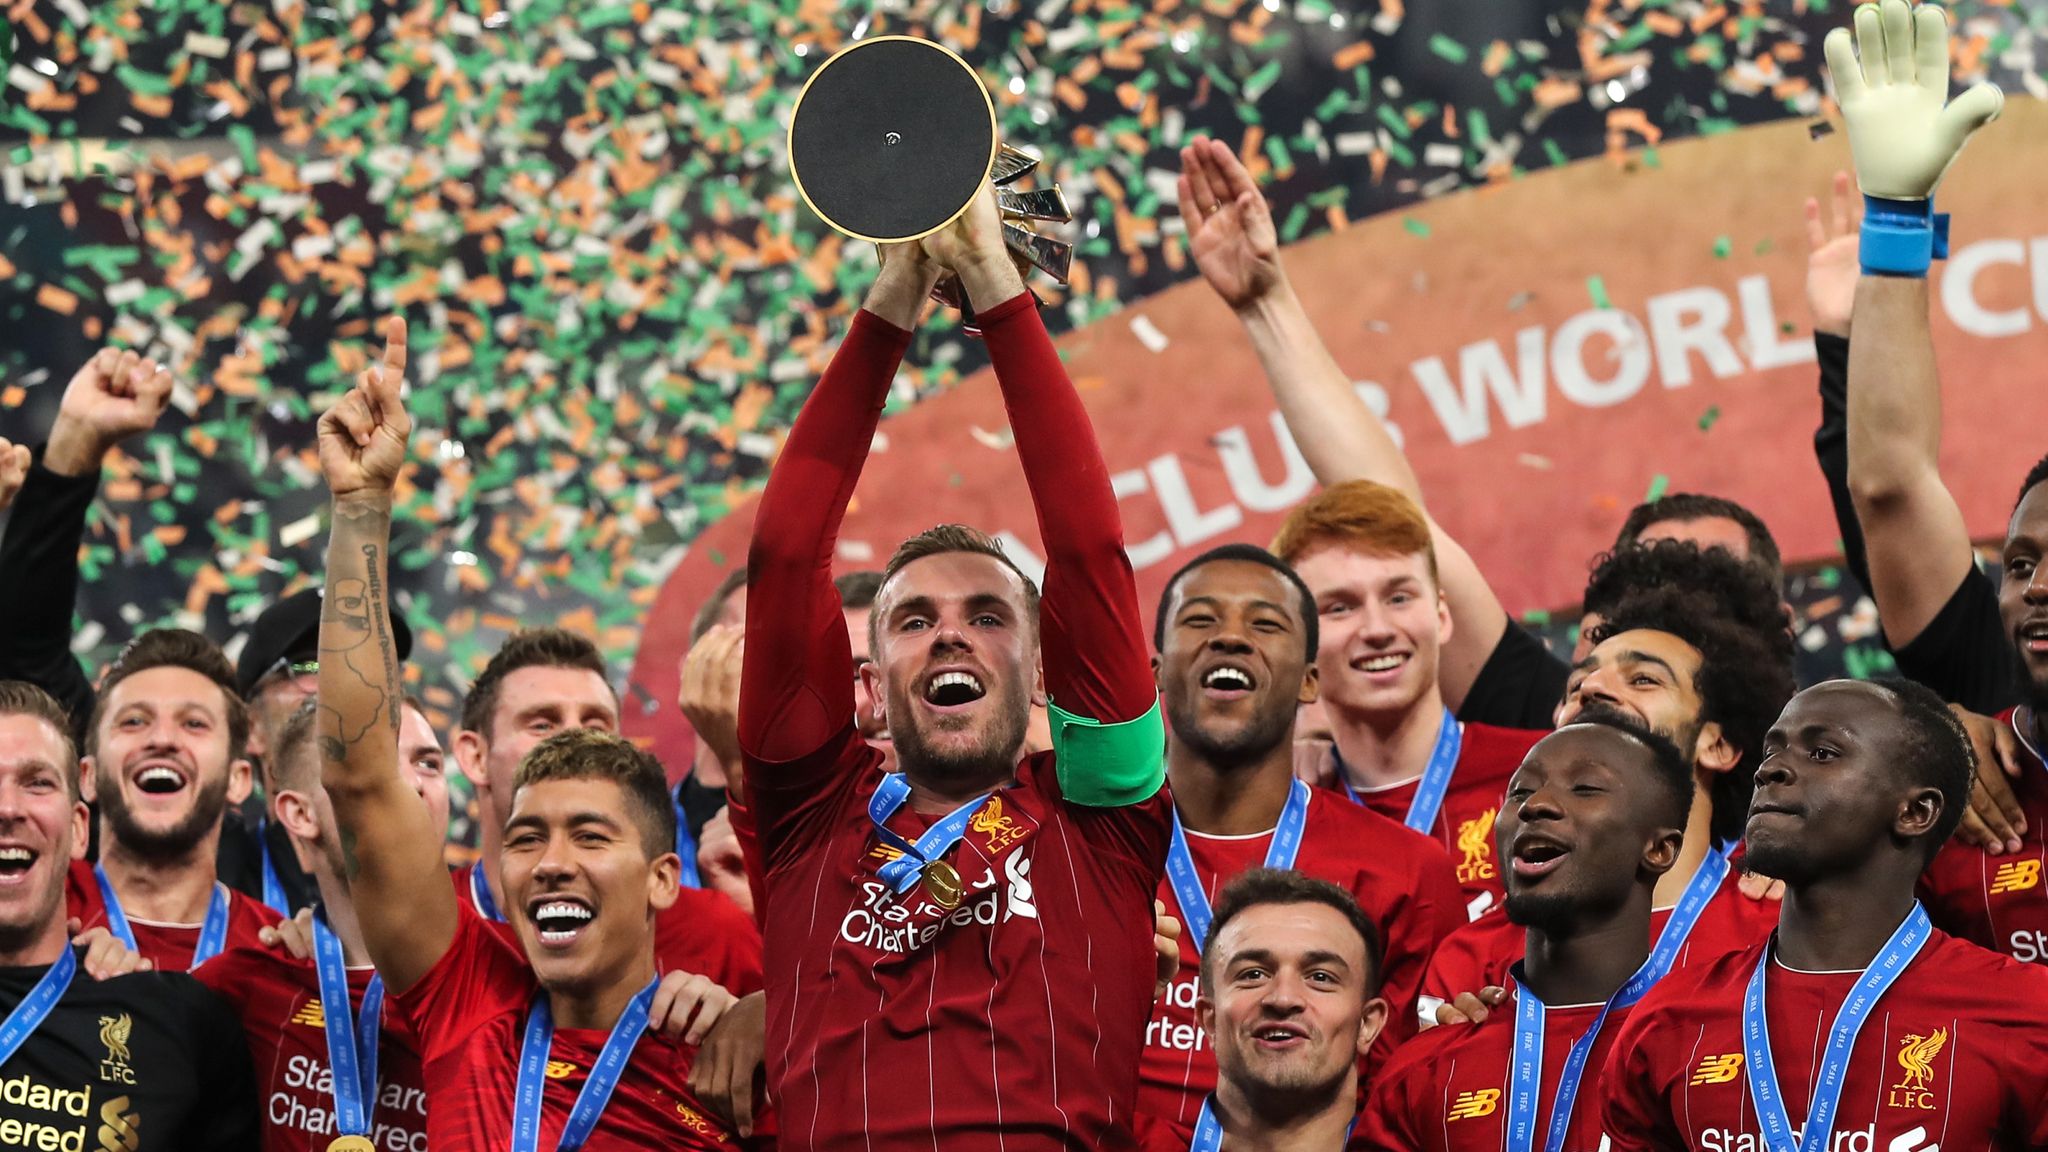 Liverpool Football Club Club World Cup winners 2019 photograph 3